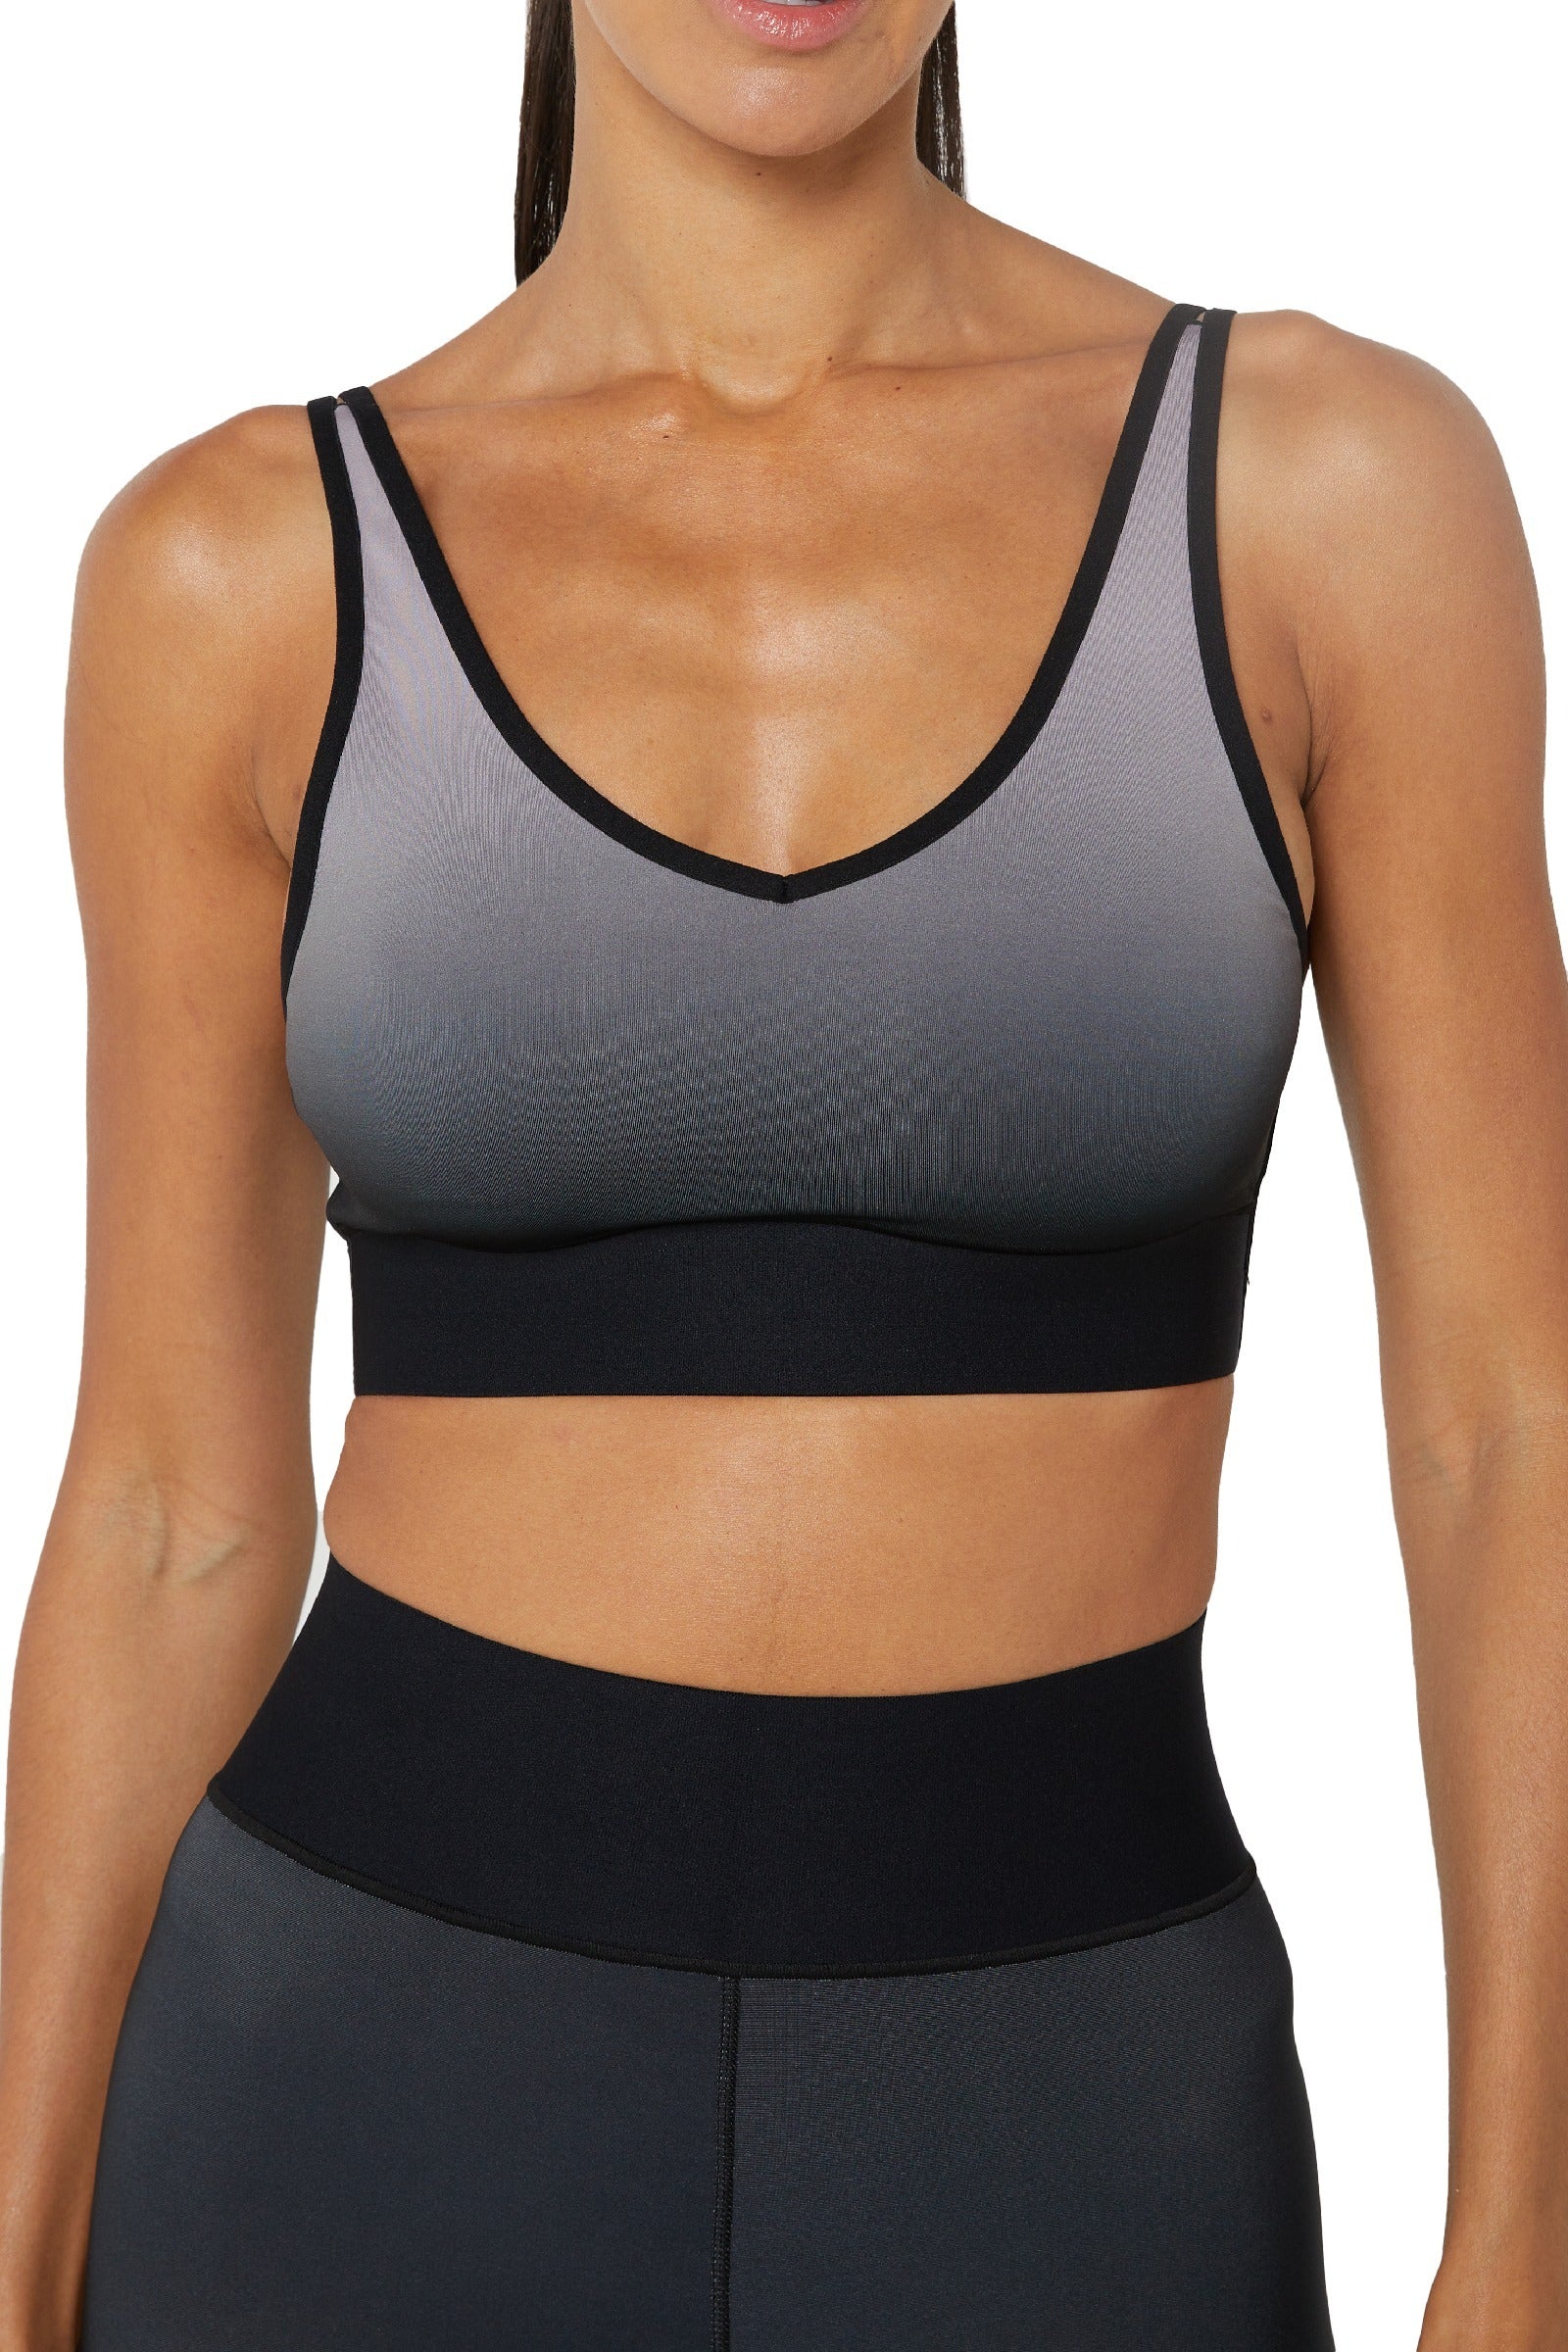 Cali Sports Cali Sport strappy breathable stretchy gray sports bra women  Size Medium - $19 - From Anas